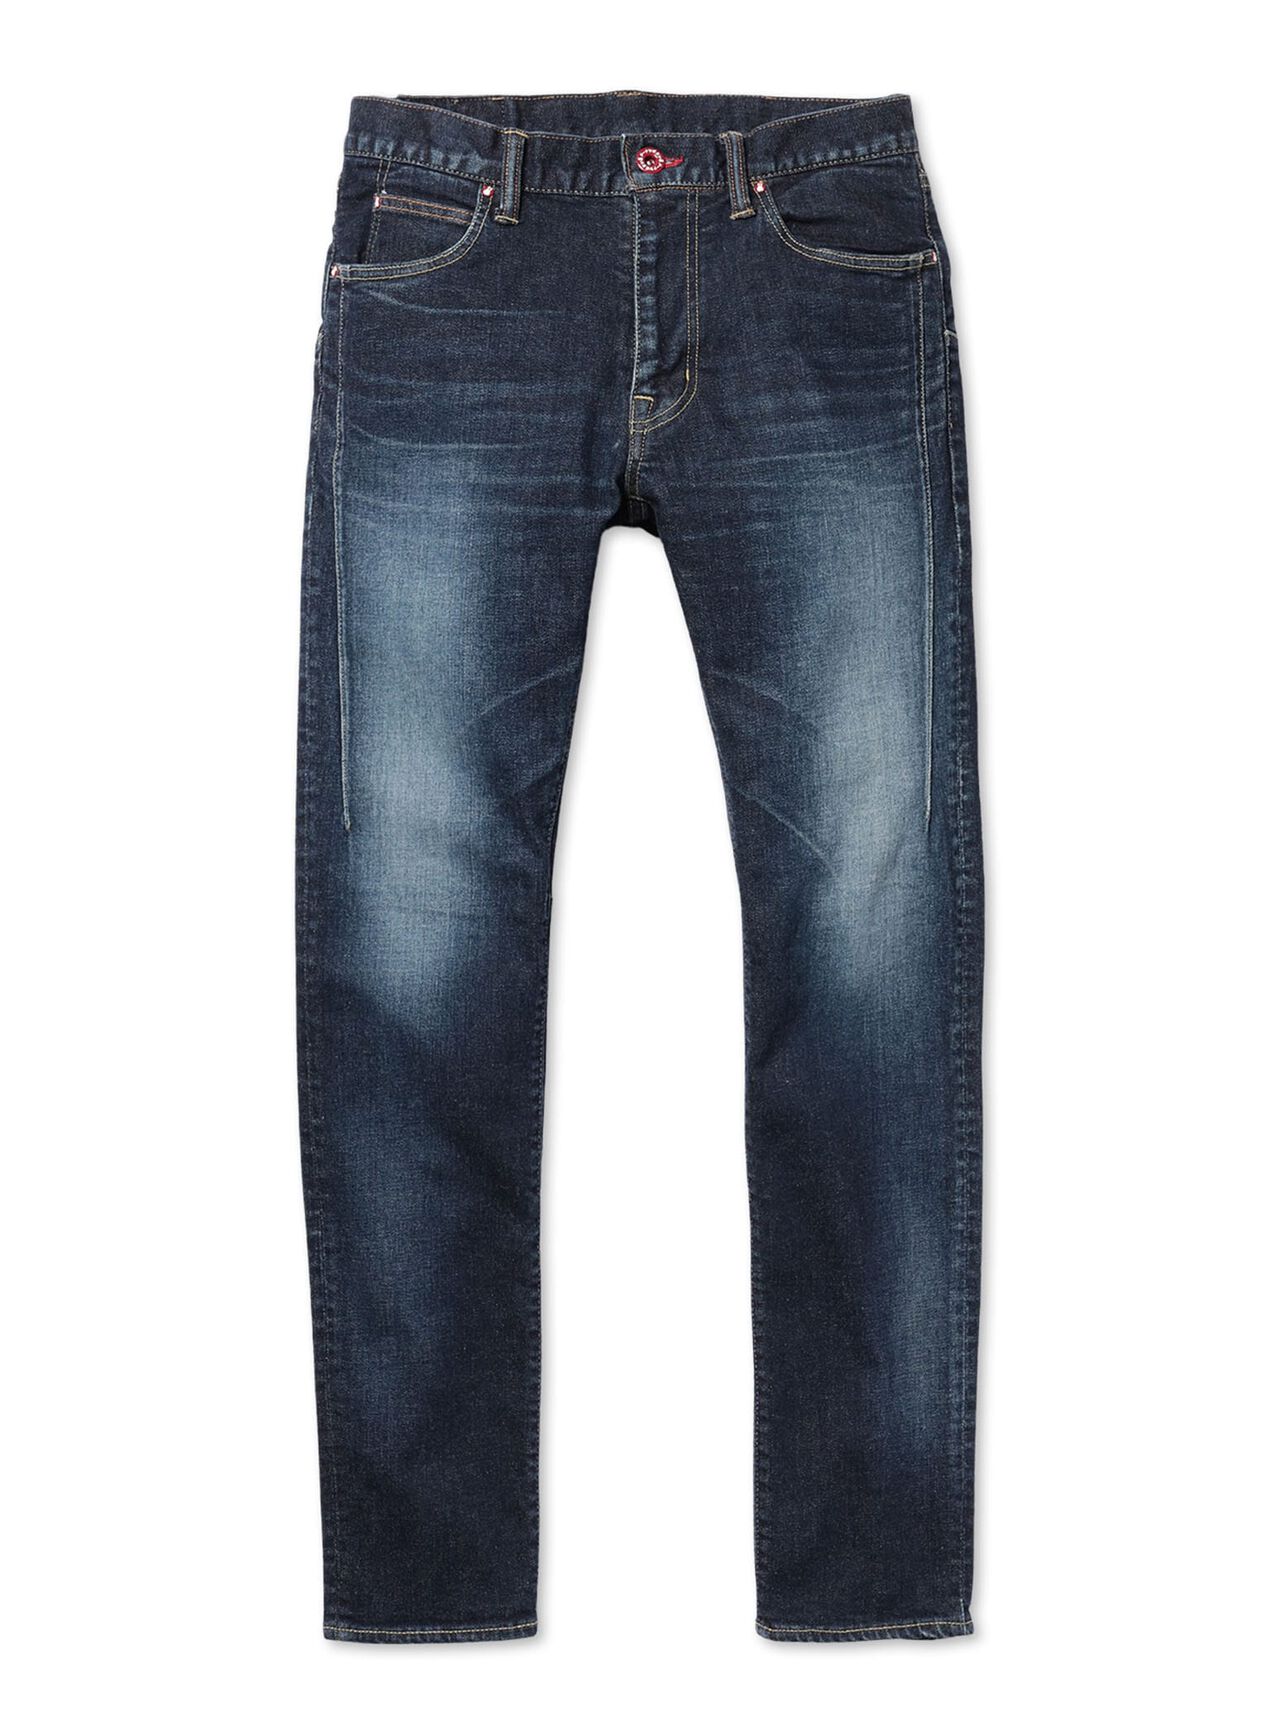 Jeans - slim 22-U2 2 years,L, large image number 1